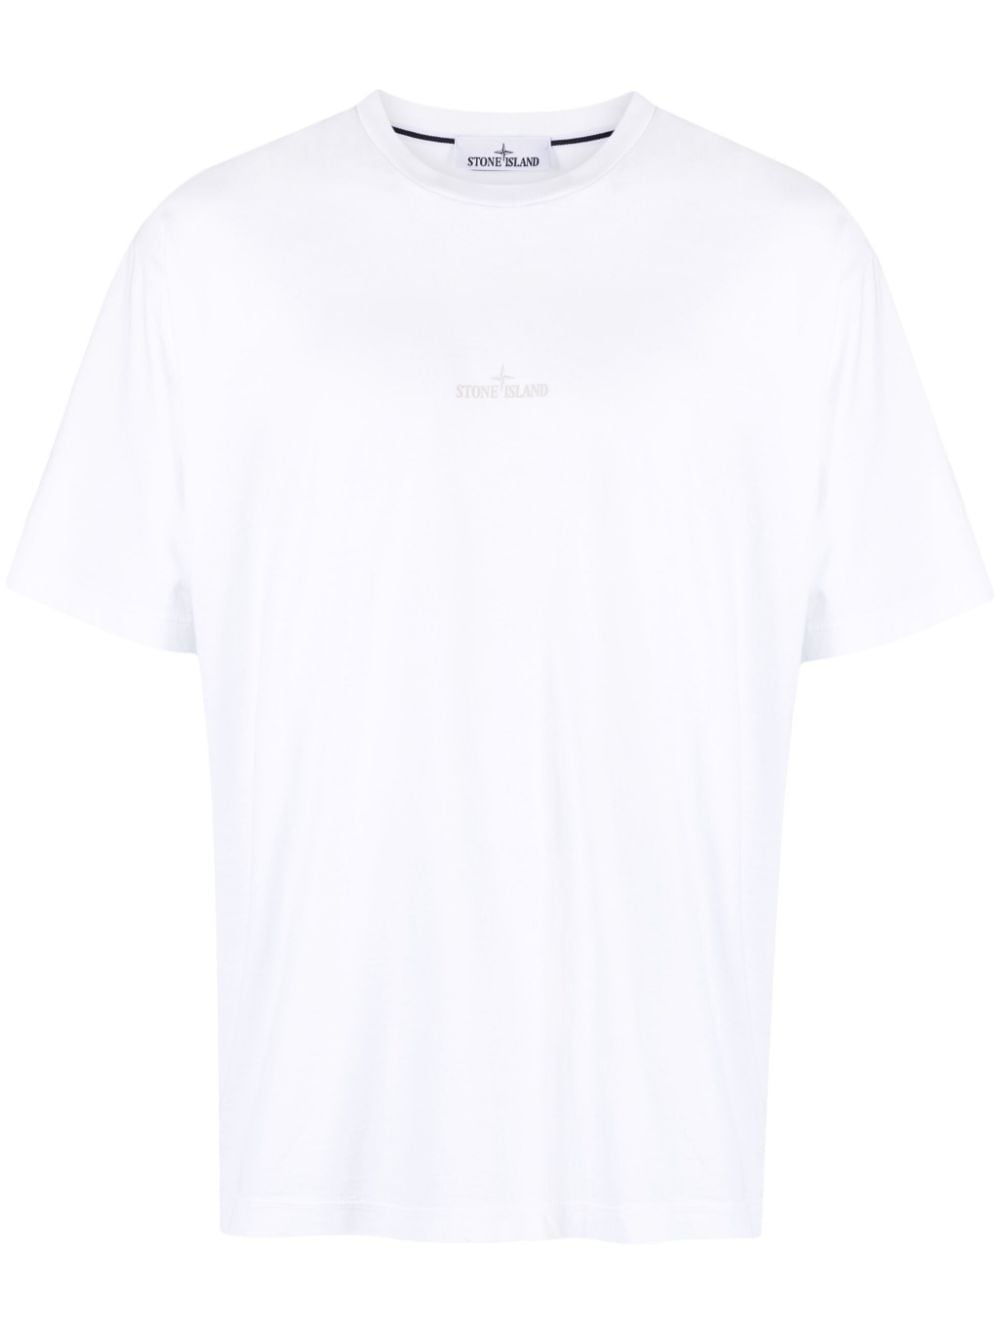 Compass-print cotton T-shirt<BR/><BR/><BR/>